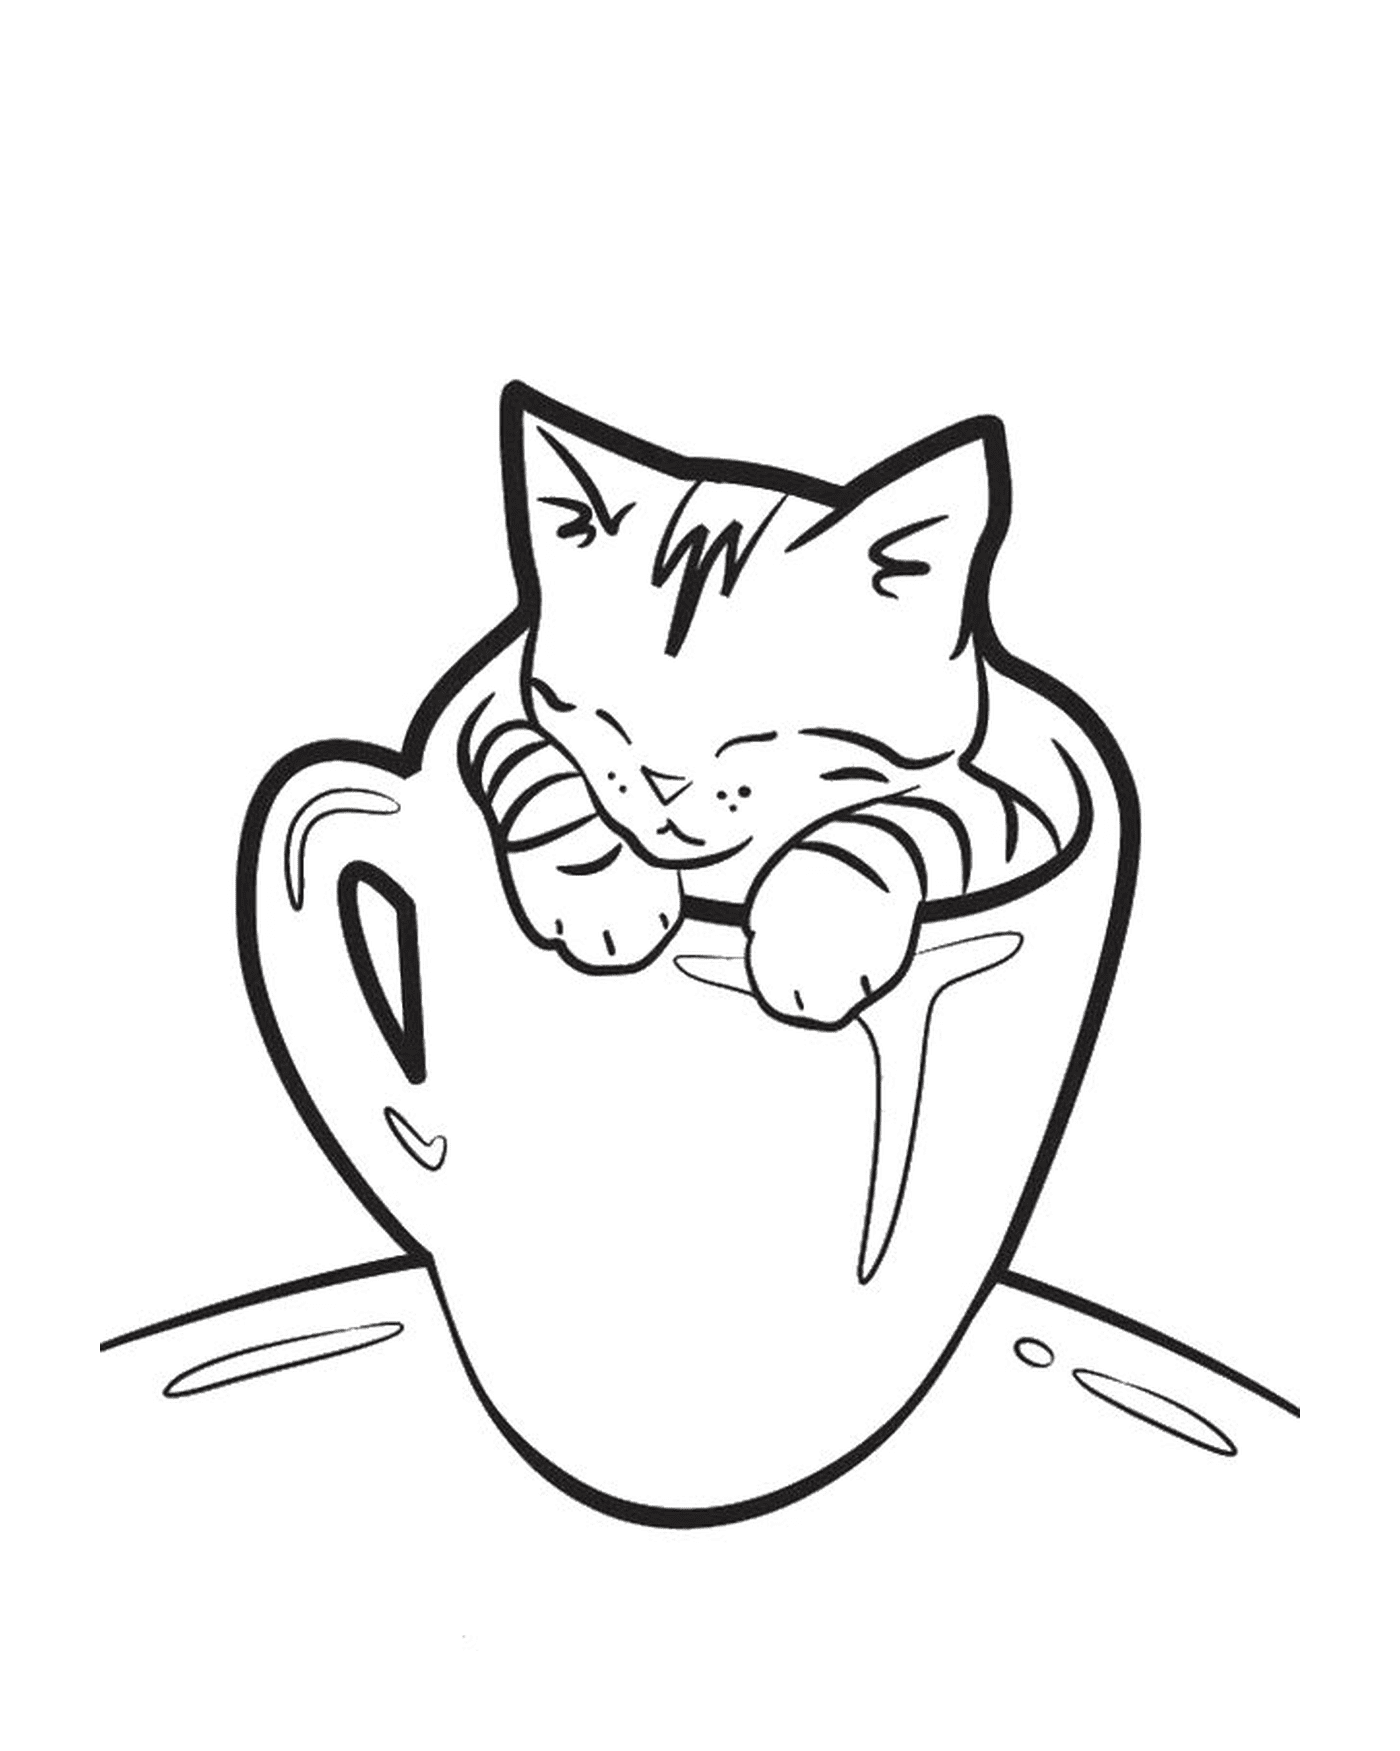  Una taza de café con un gato divertido 